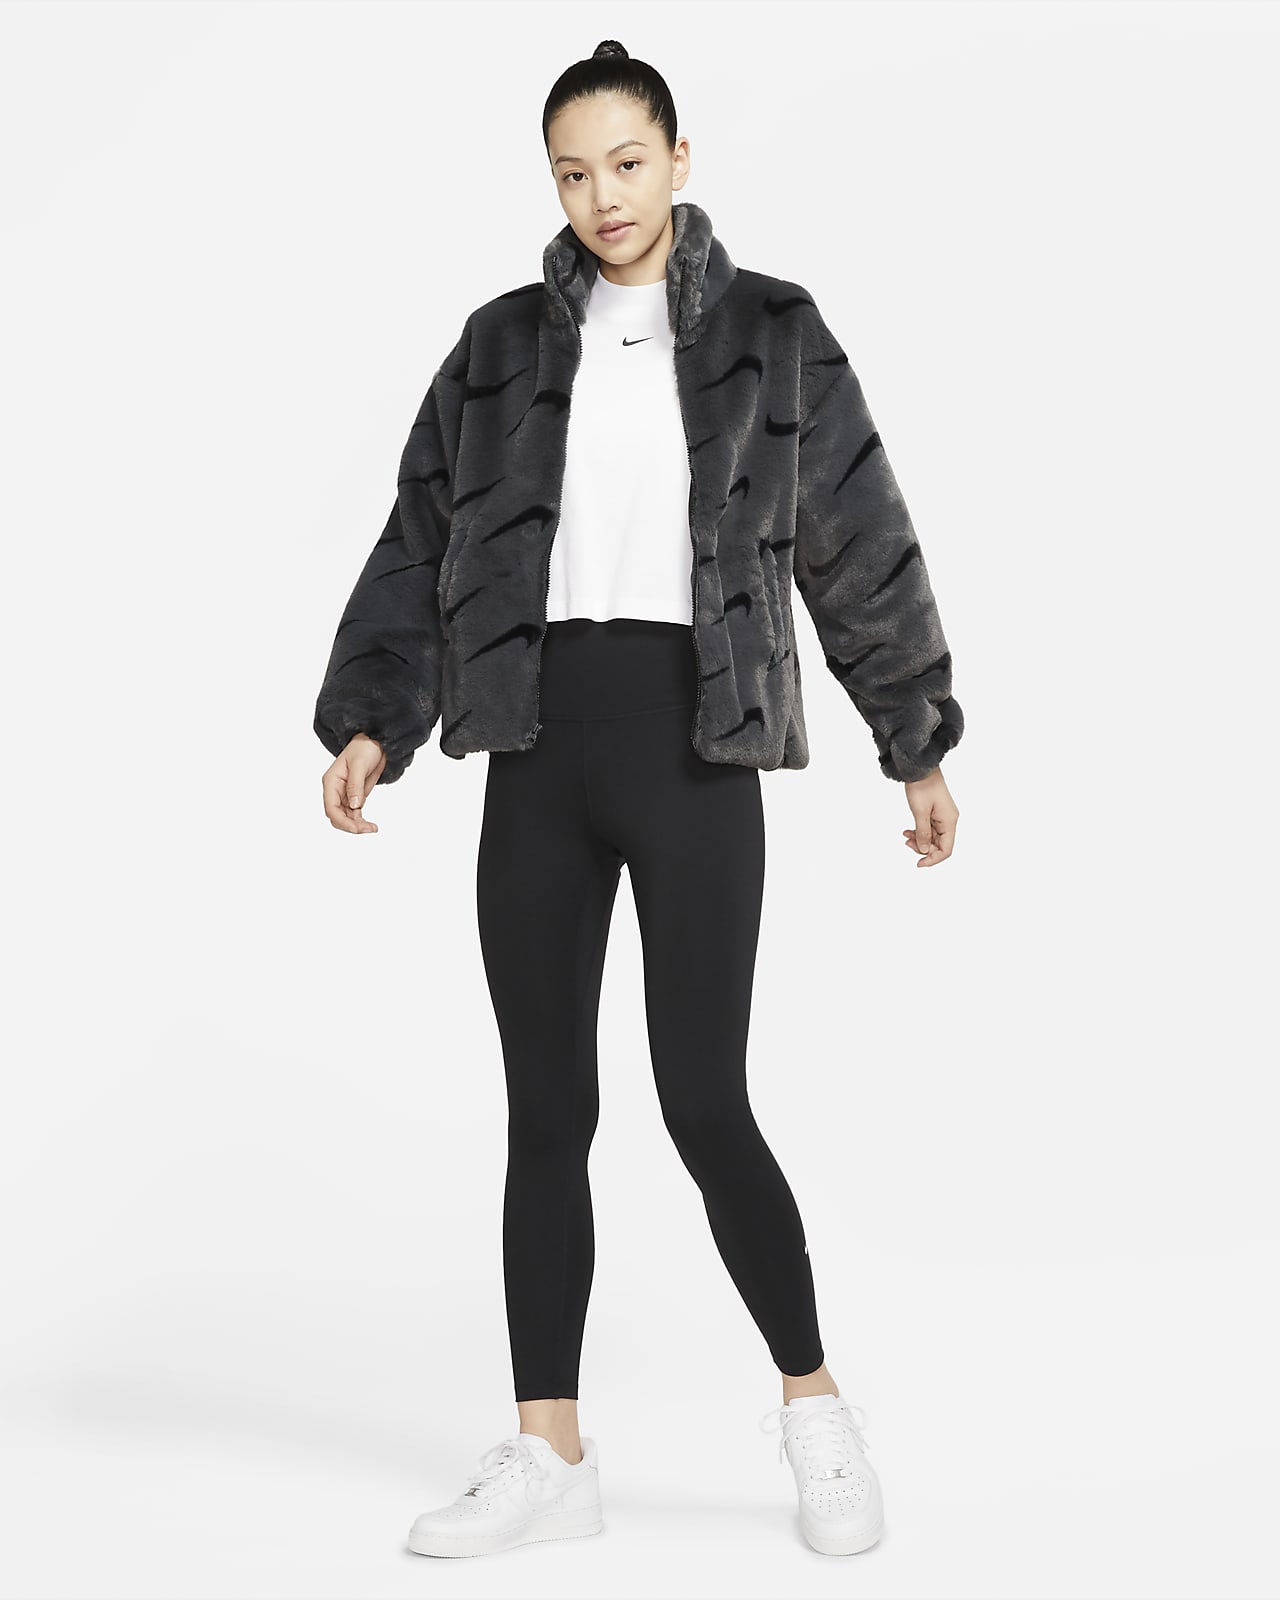 Women's Nike Sportswear Plush Fur Jacket - Burgundy Crush Black